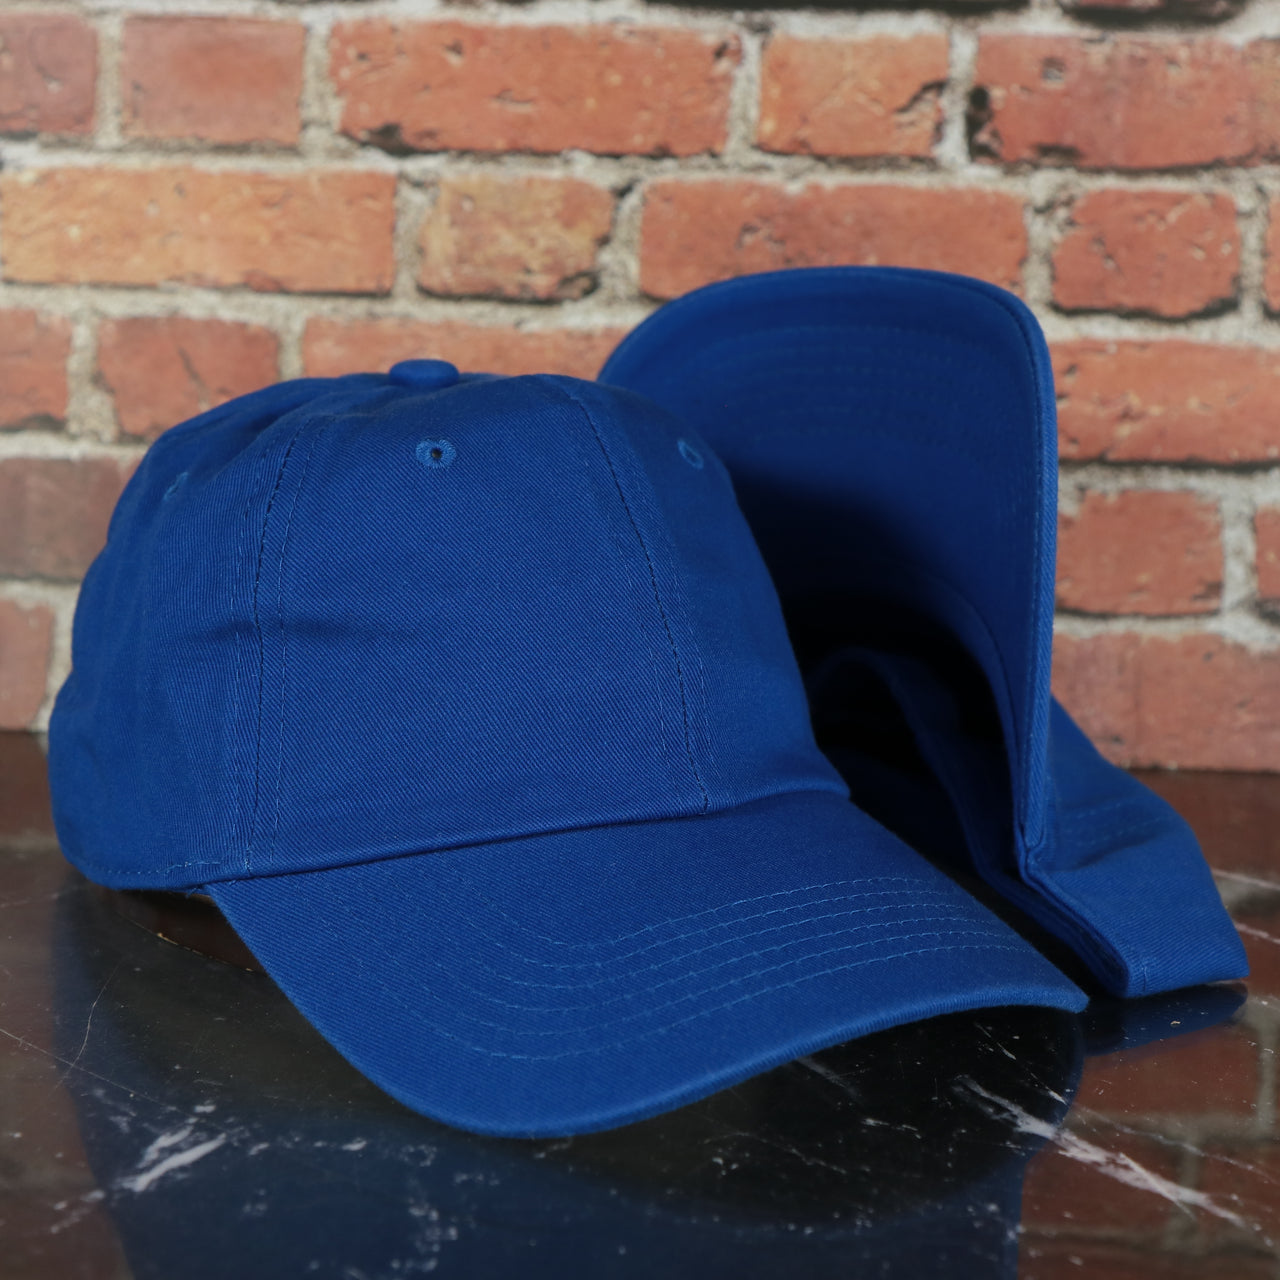 Blank Royal Blue Adjustable Dad Hat Baseball Cap with No Design